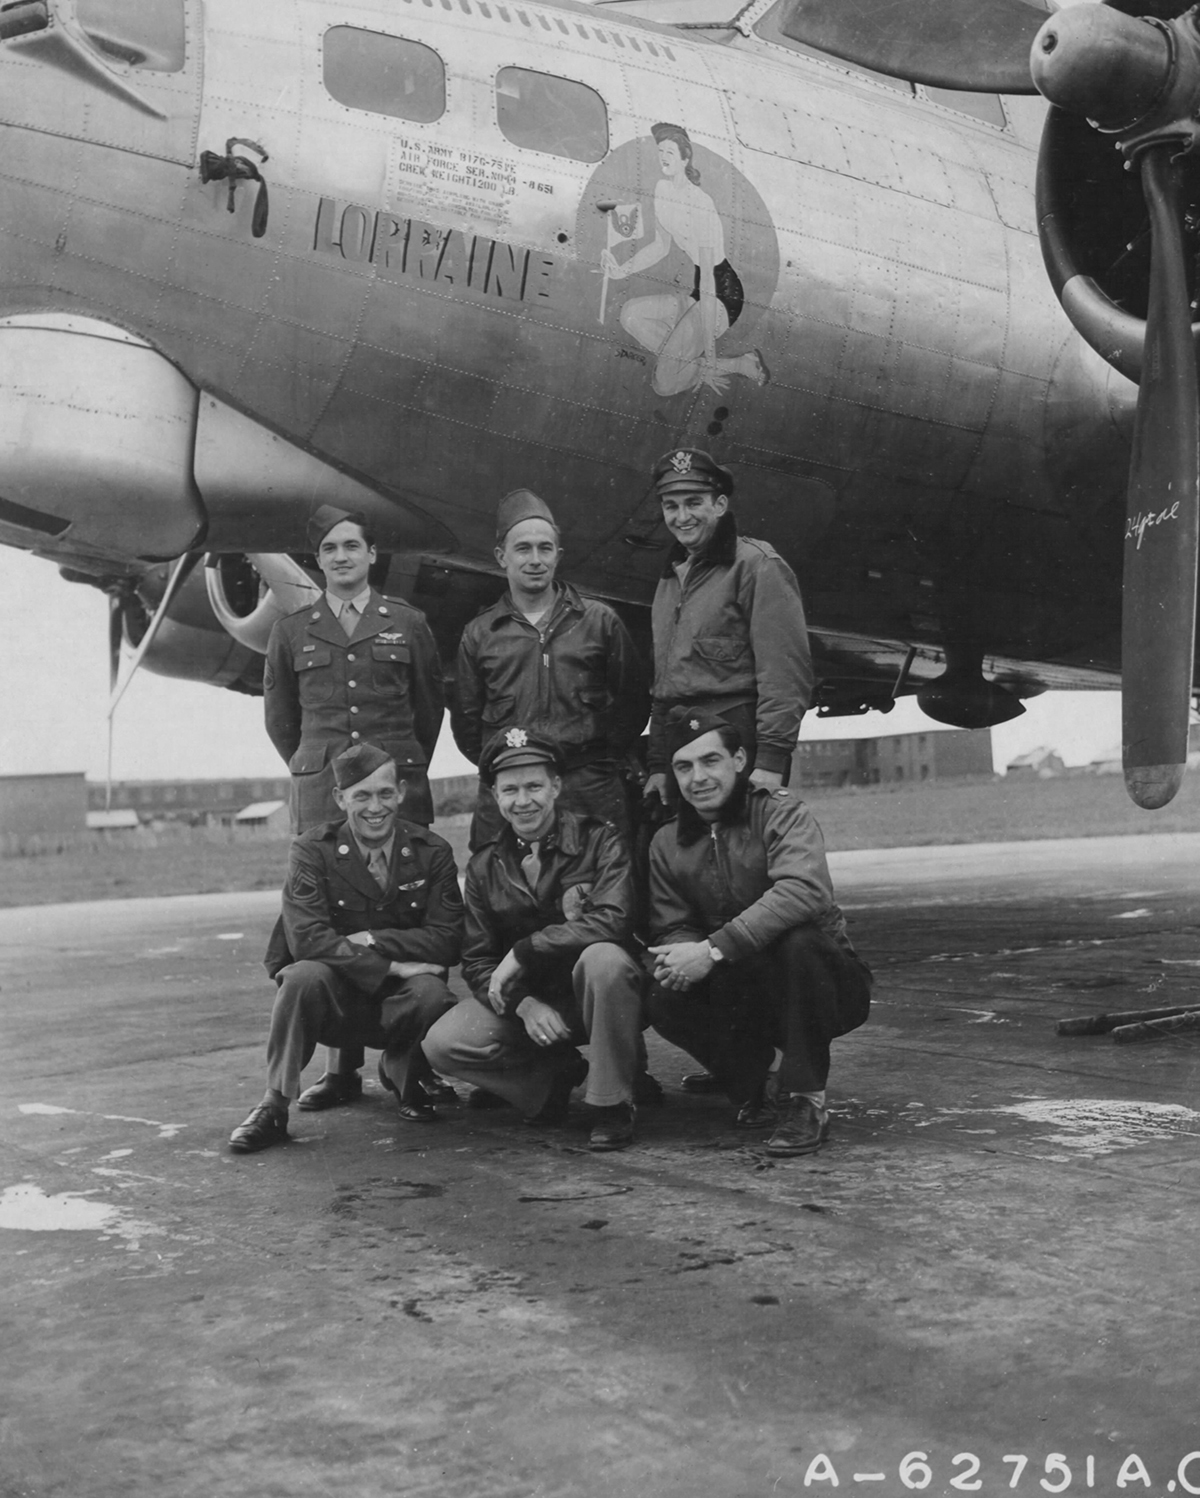 B-17 #44-8651 / Lorraine